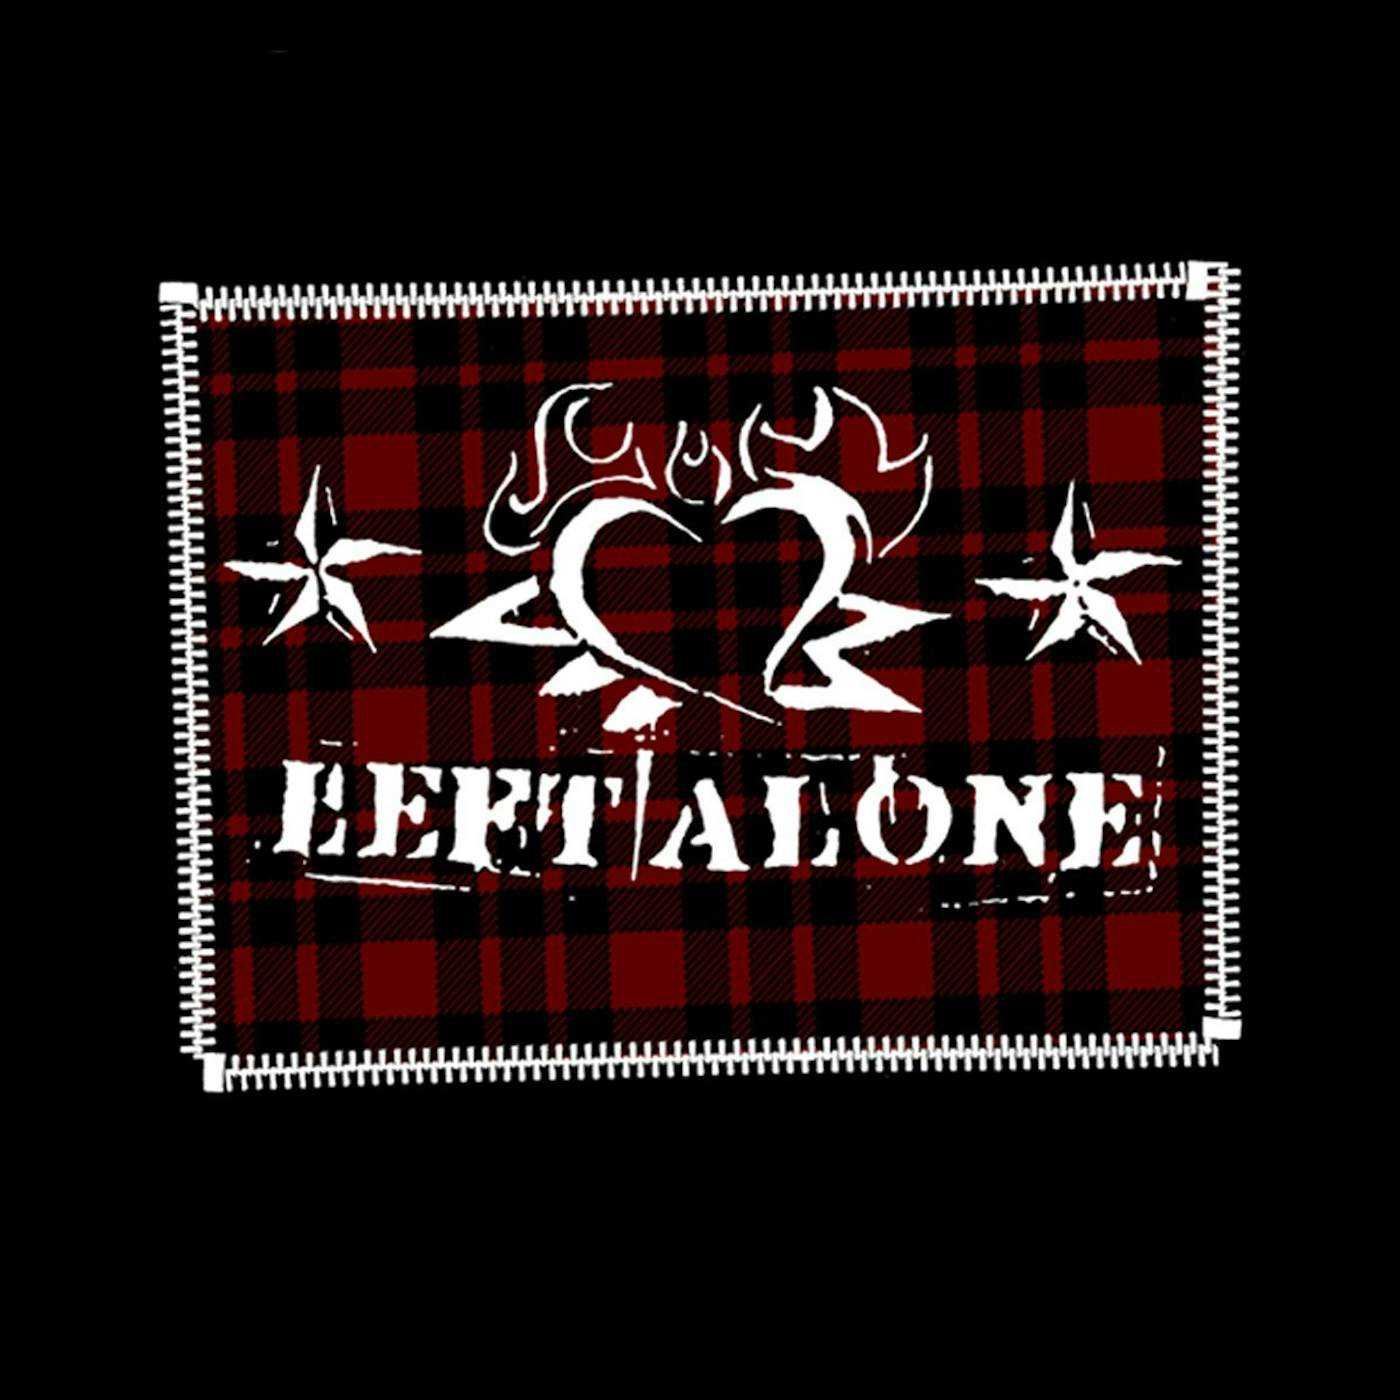 Left Alone Heart Logo Shirt